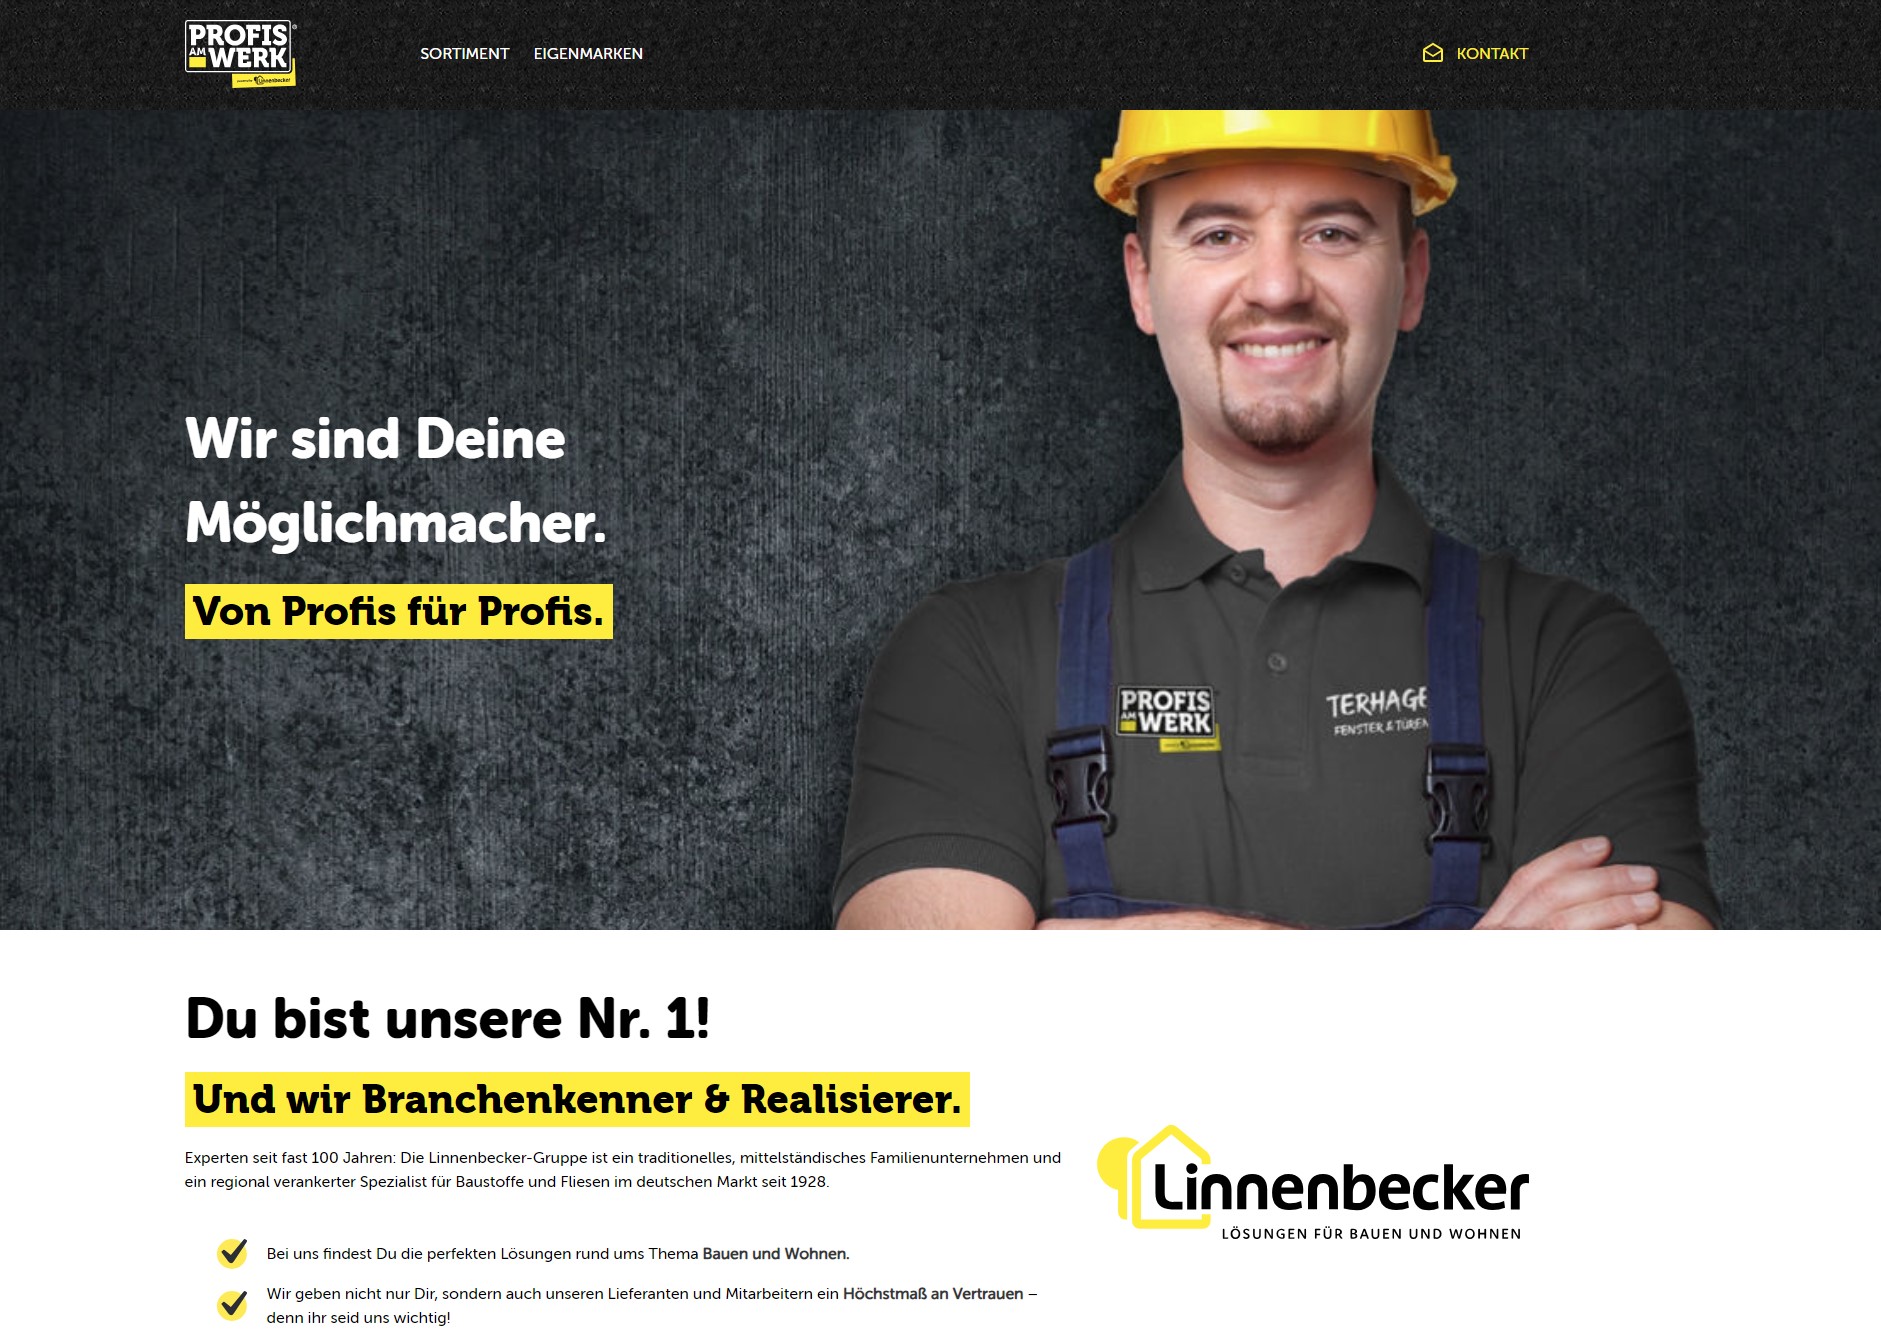 Profis am Werk by Linnebecker